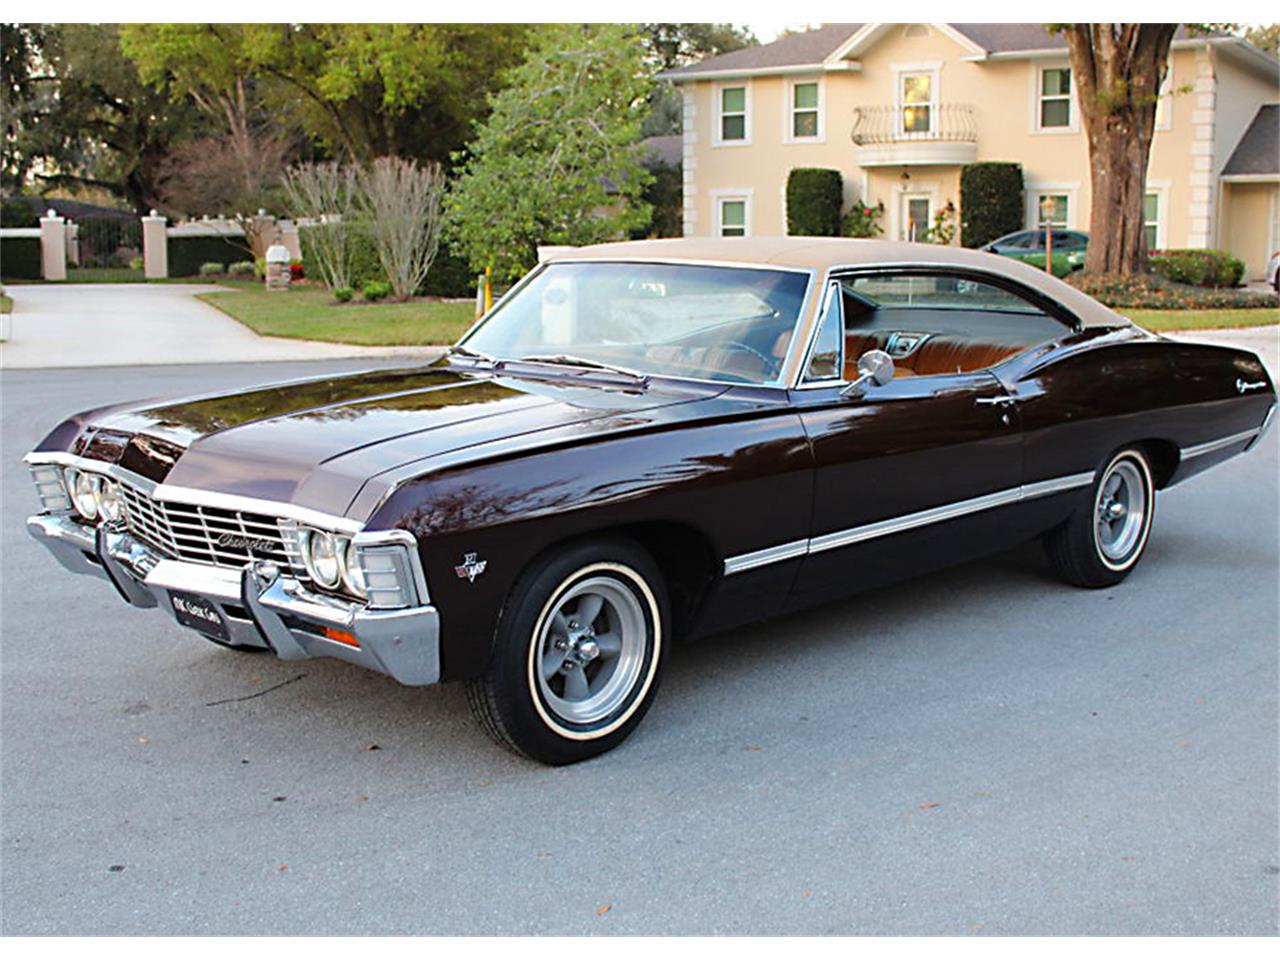 1967 Chevrolet Impala for sale in Lakeland, FL - photo 2.